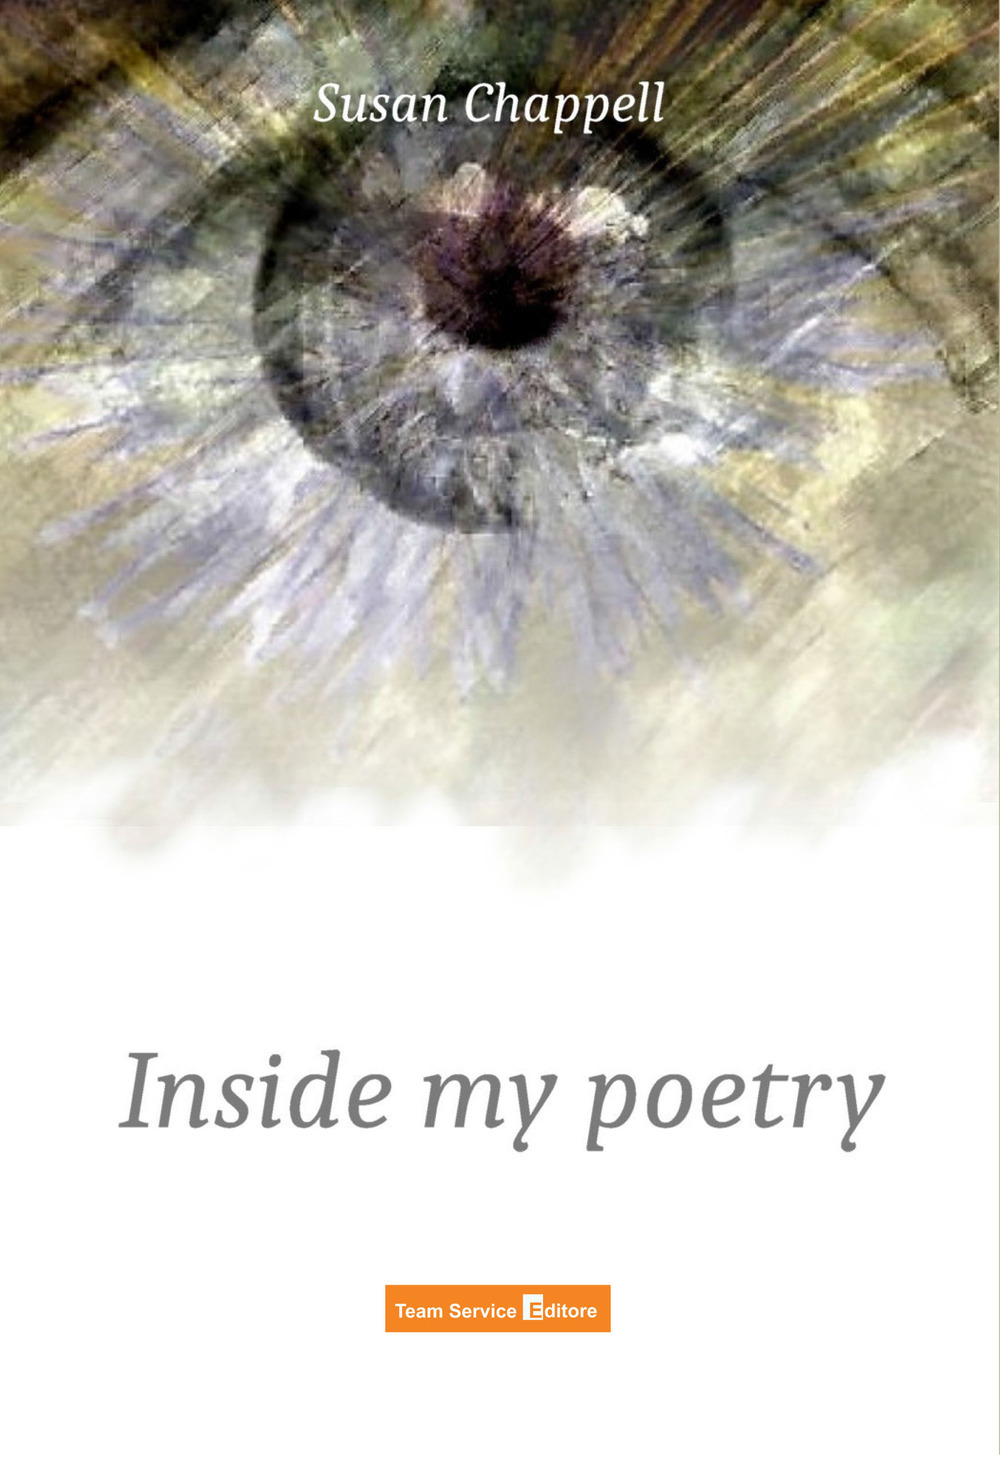 Inside my poetry